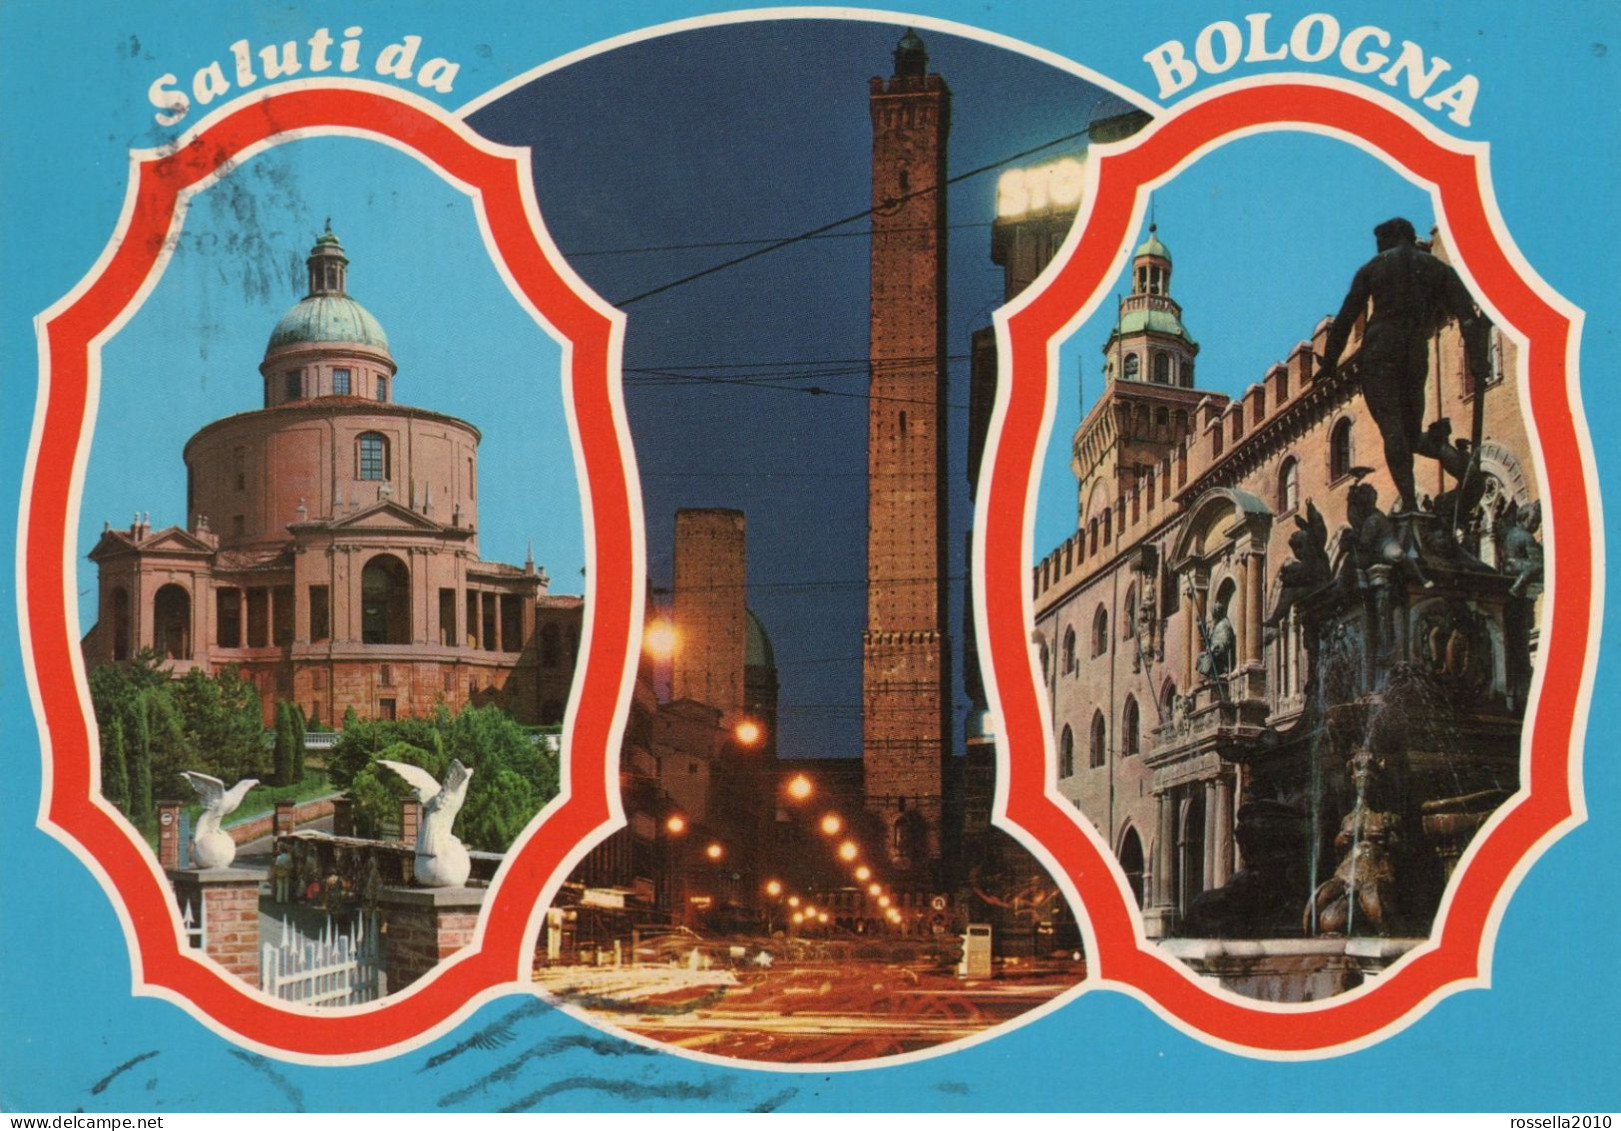 CARTOLINA AUTOMOBILI ITALIA 1979 BOLOGNA SALUTI VEDUTINE Italy Postcard ITALIEN Ansichtskarten - Bologna